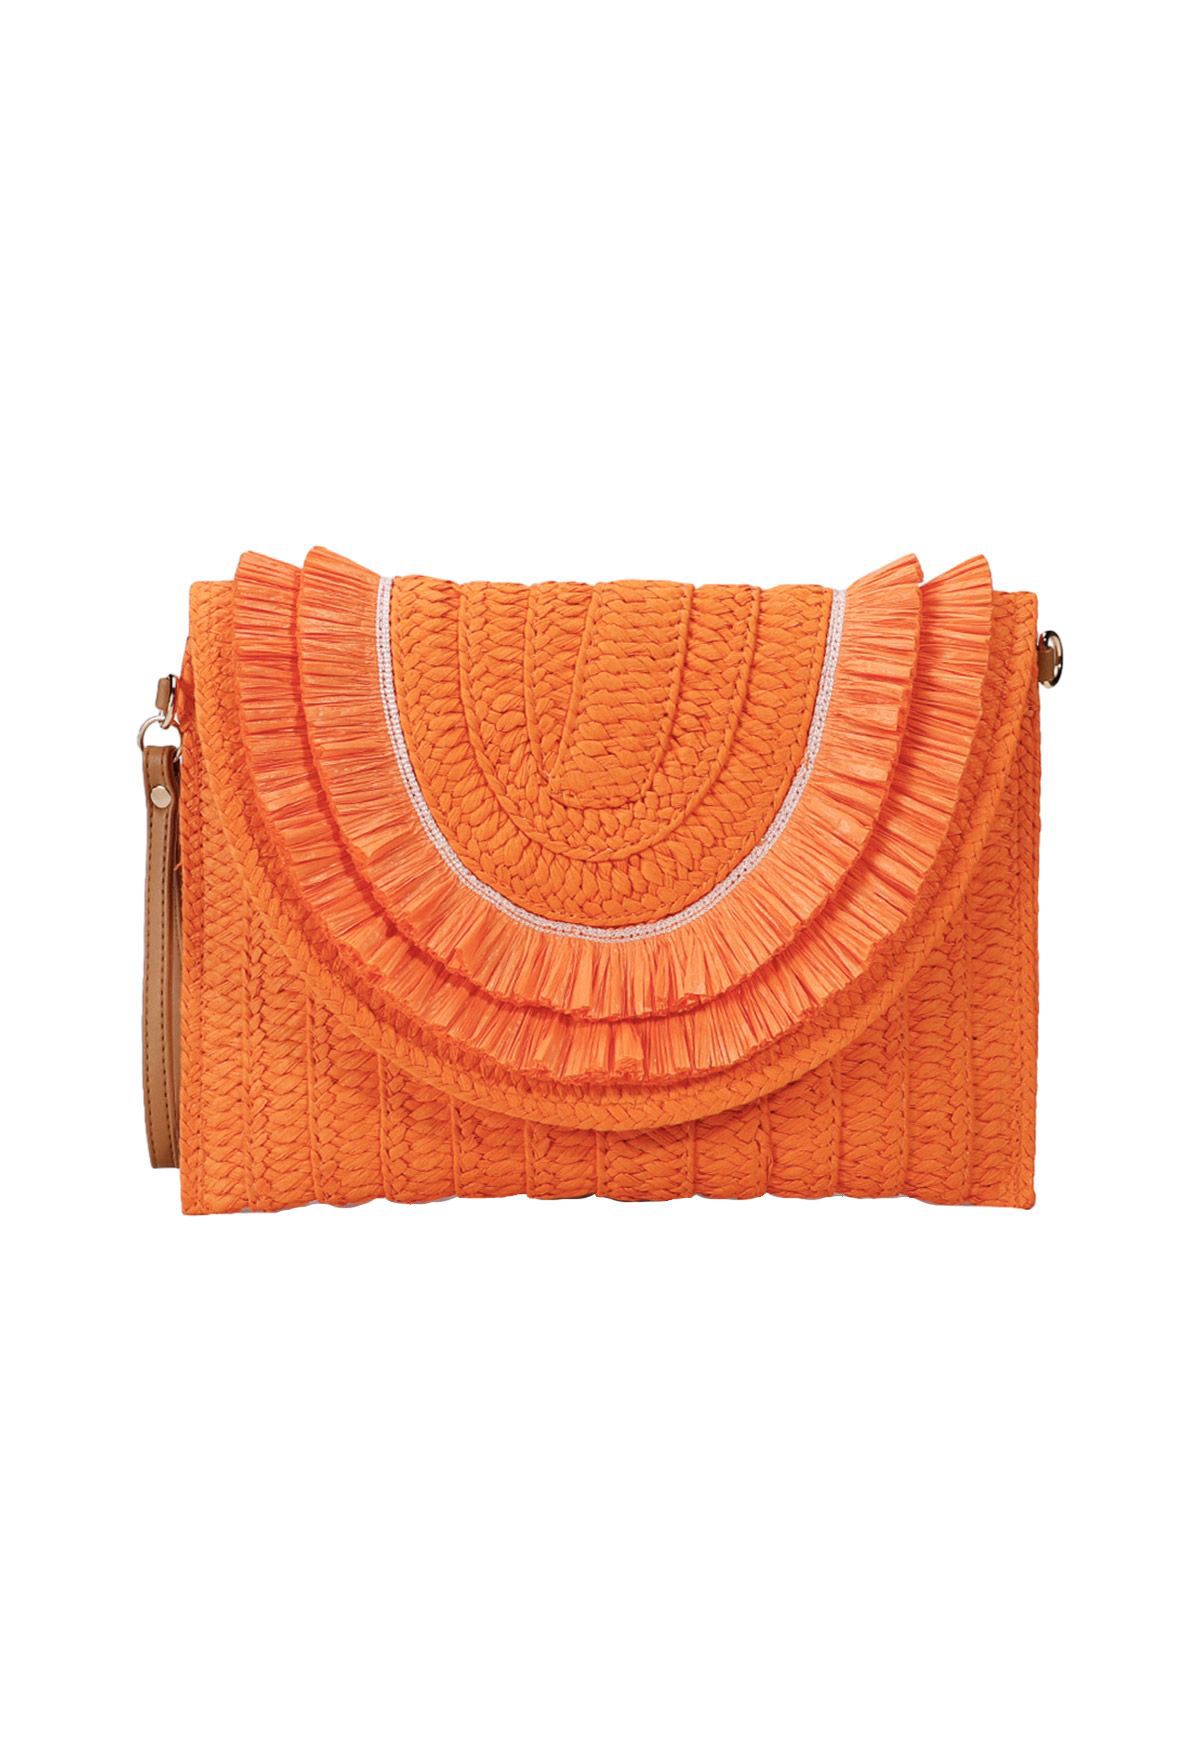 65 ideas de A pantalón naranja  ropa, combinacion colores ropa, naranja